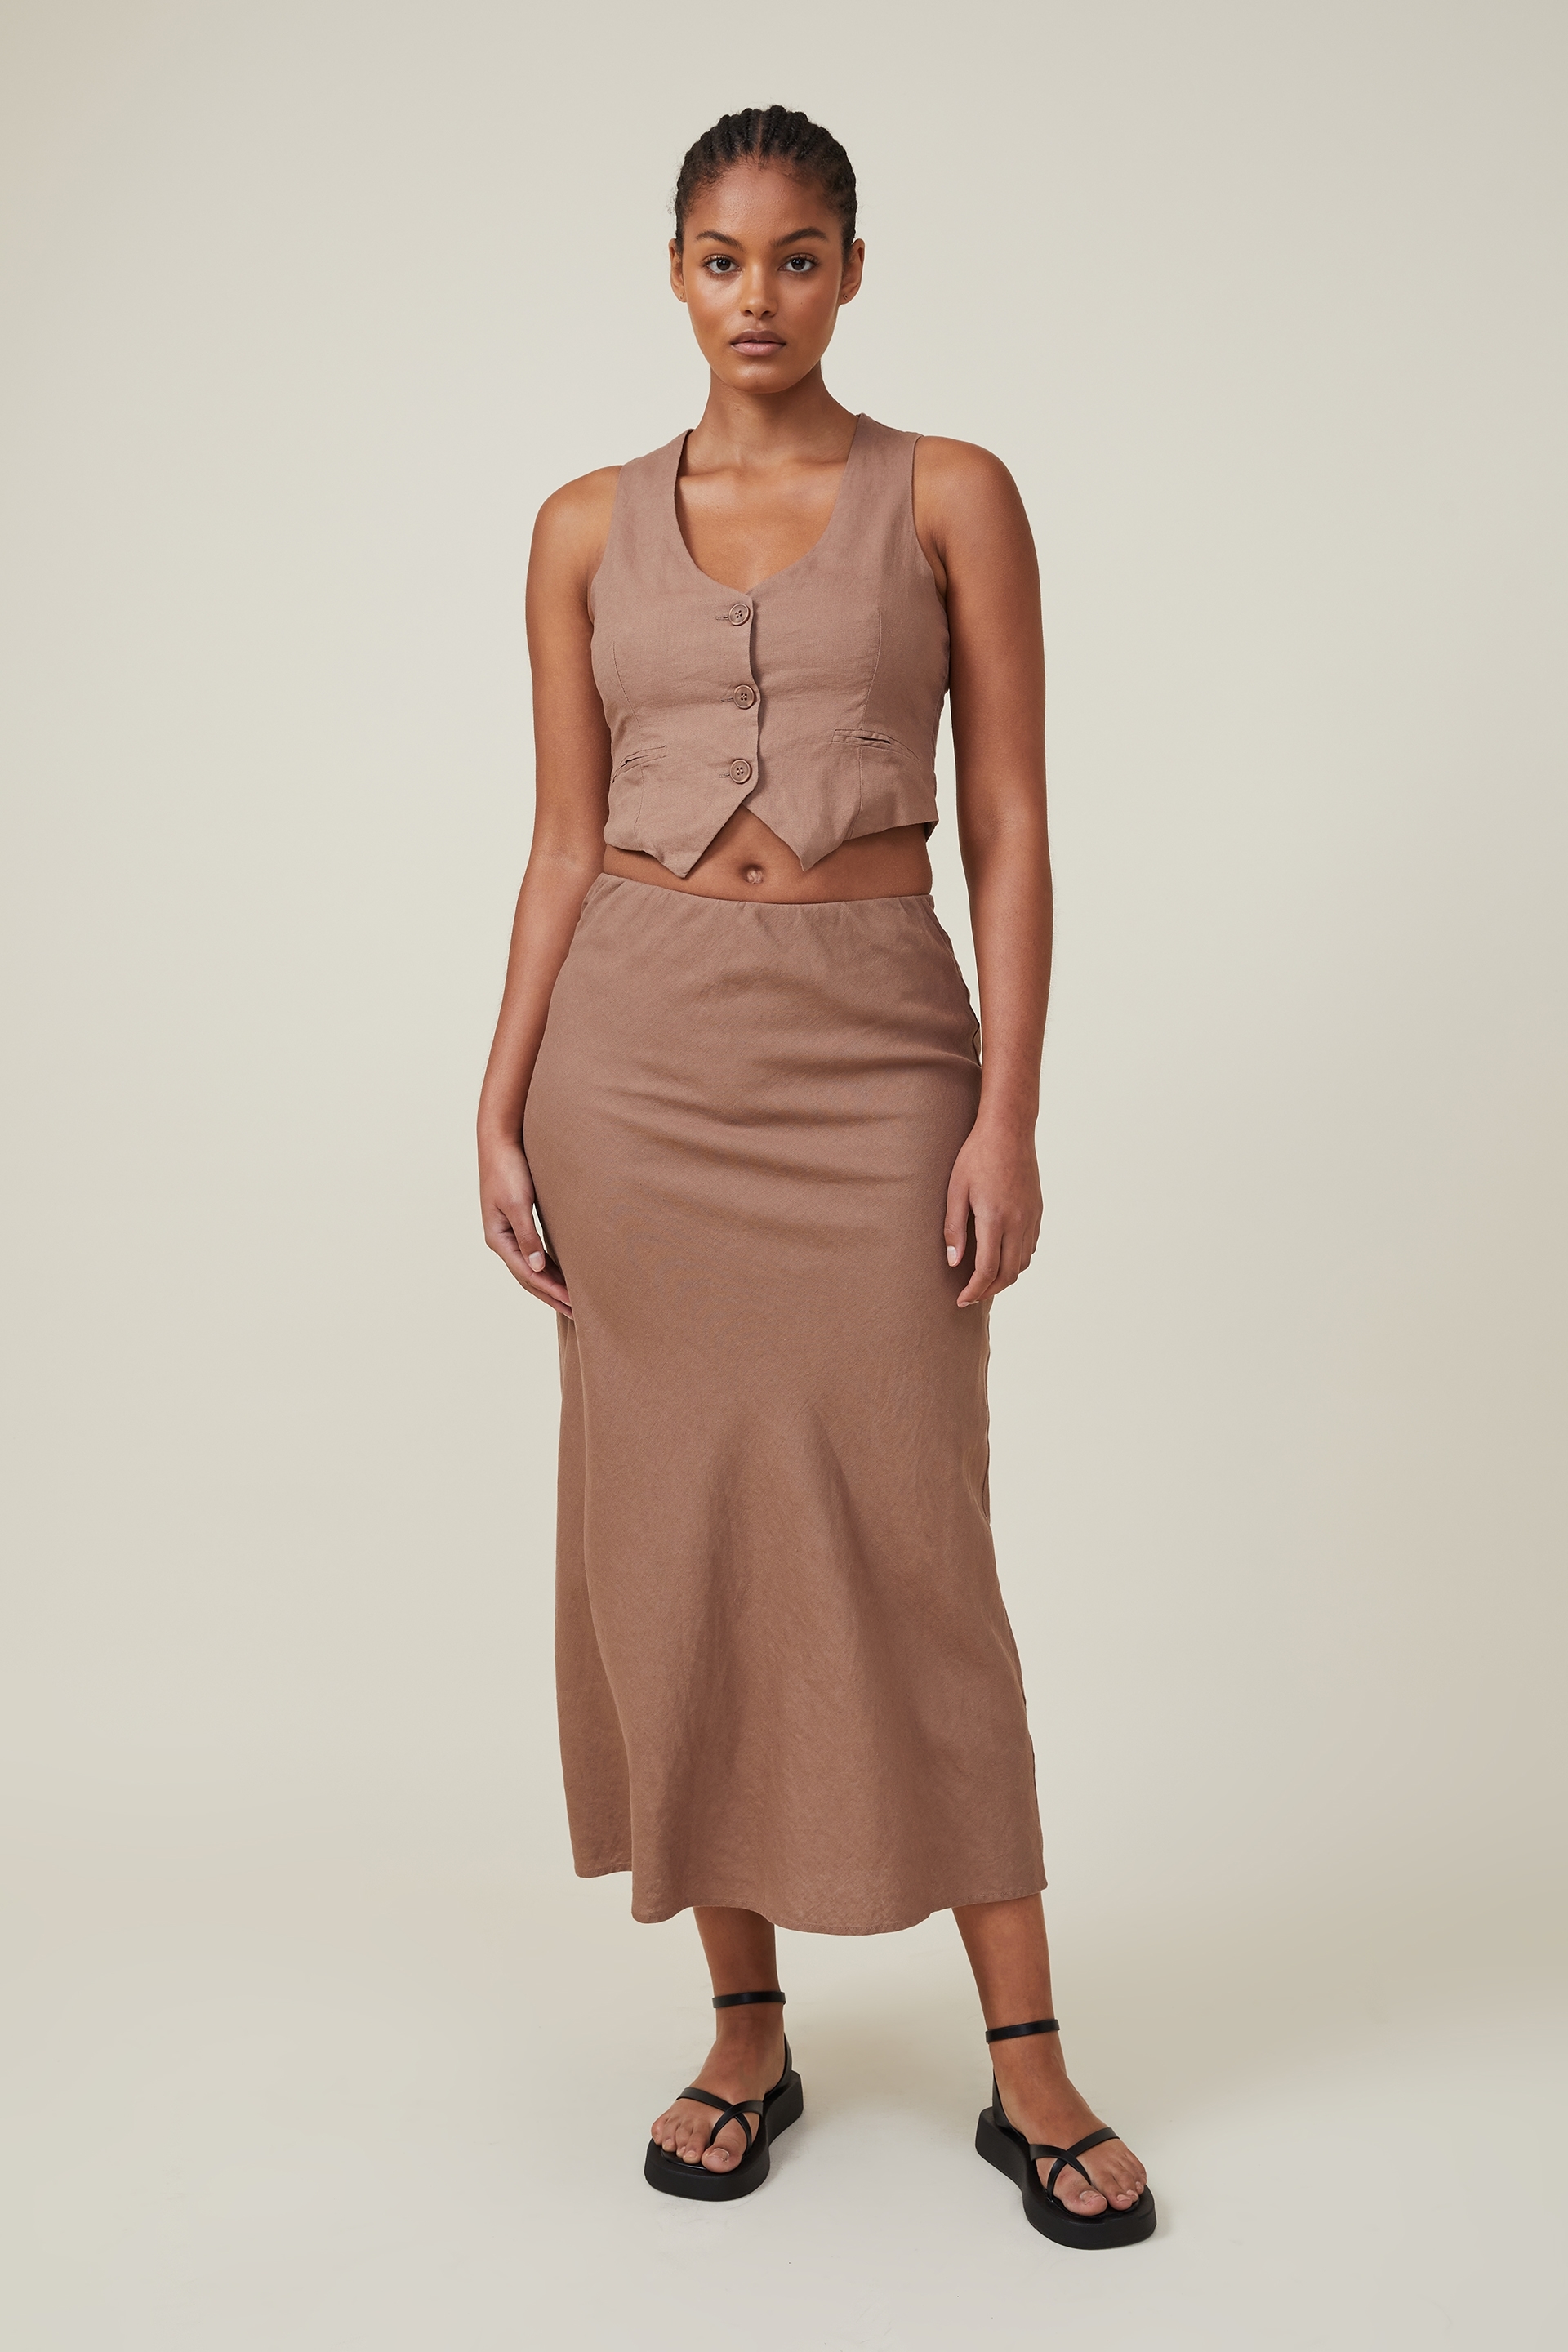 Cotton On Women - Haven Maxi Skirt - Russet brown